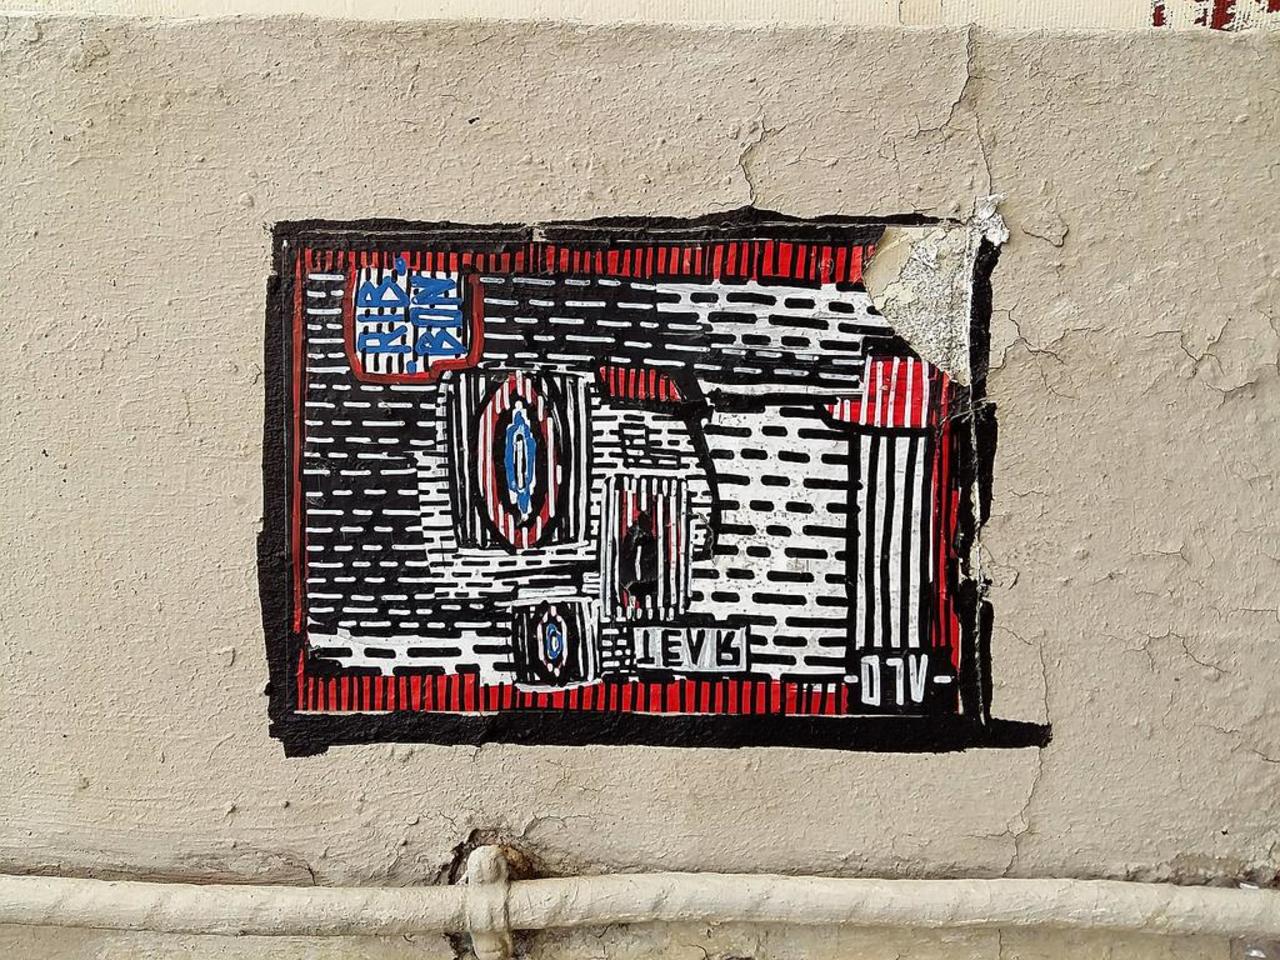 Street Art by alo_art in #Paris http://www.urbacolors.com #art #mural #graffiti #streetart http://t.co/G027u7JSGB